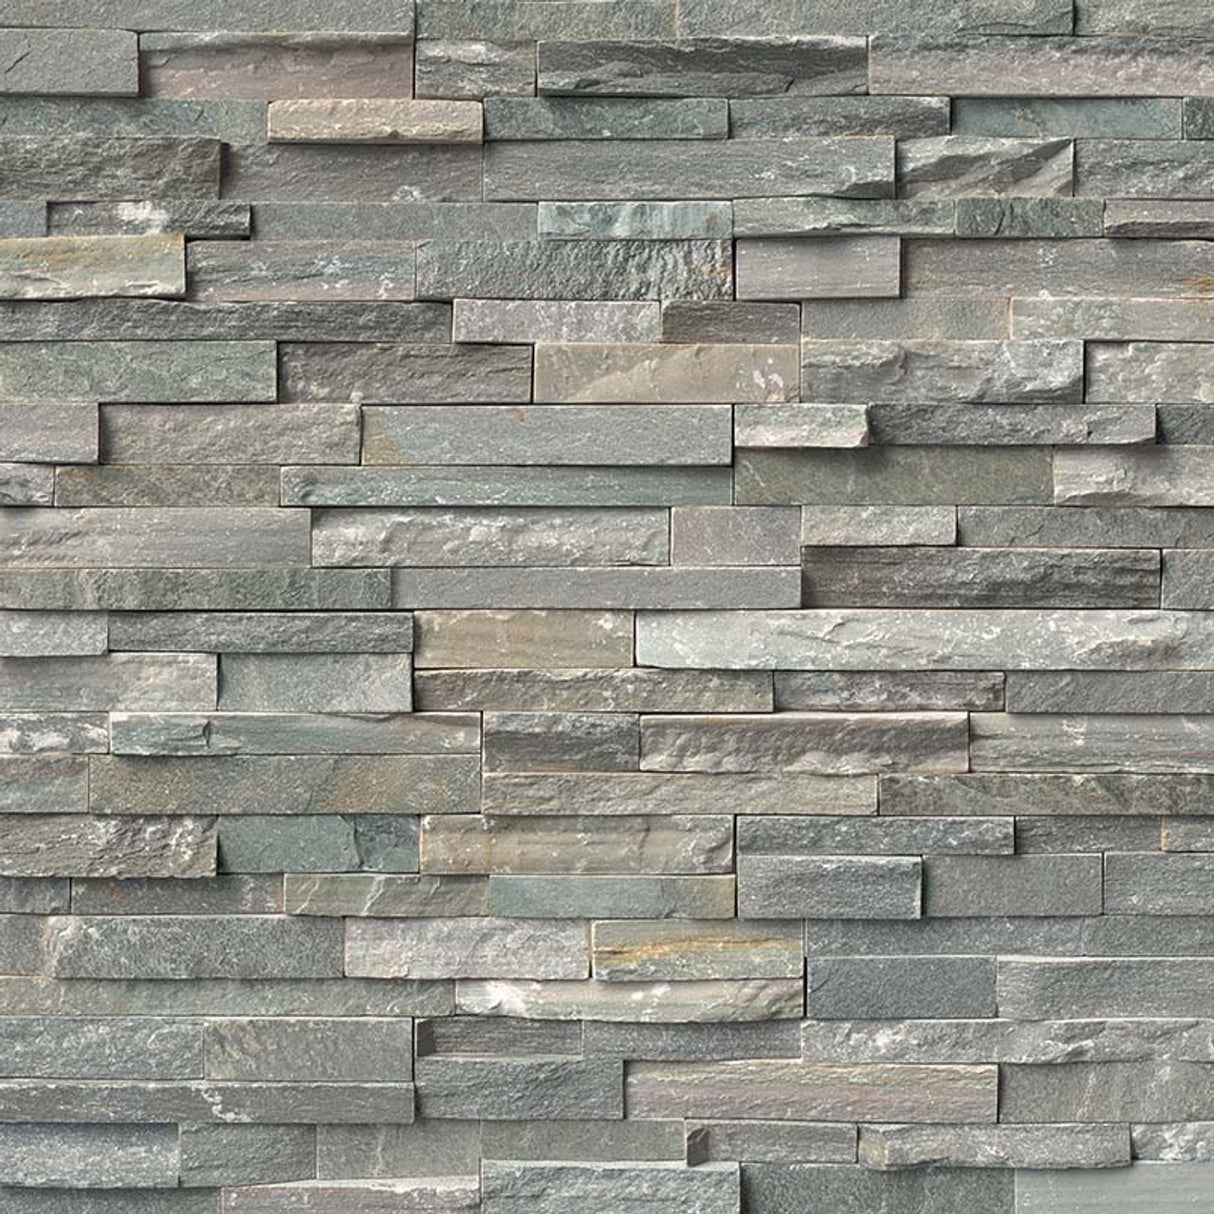 Sierra blue splitface ledger panel 6X24 natural quartzite wall tile LPNLQSIEBLU624 product shot multiple tiles angle view